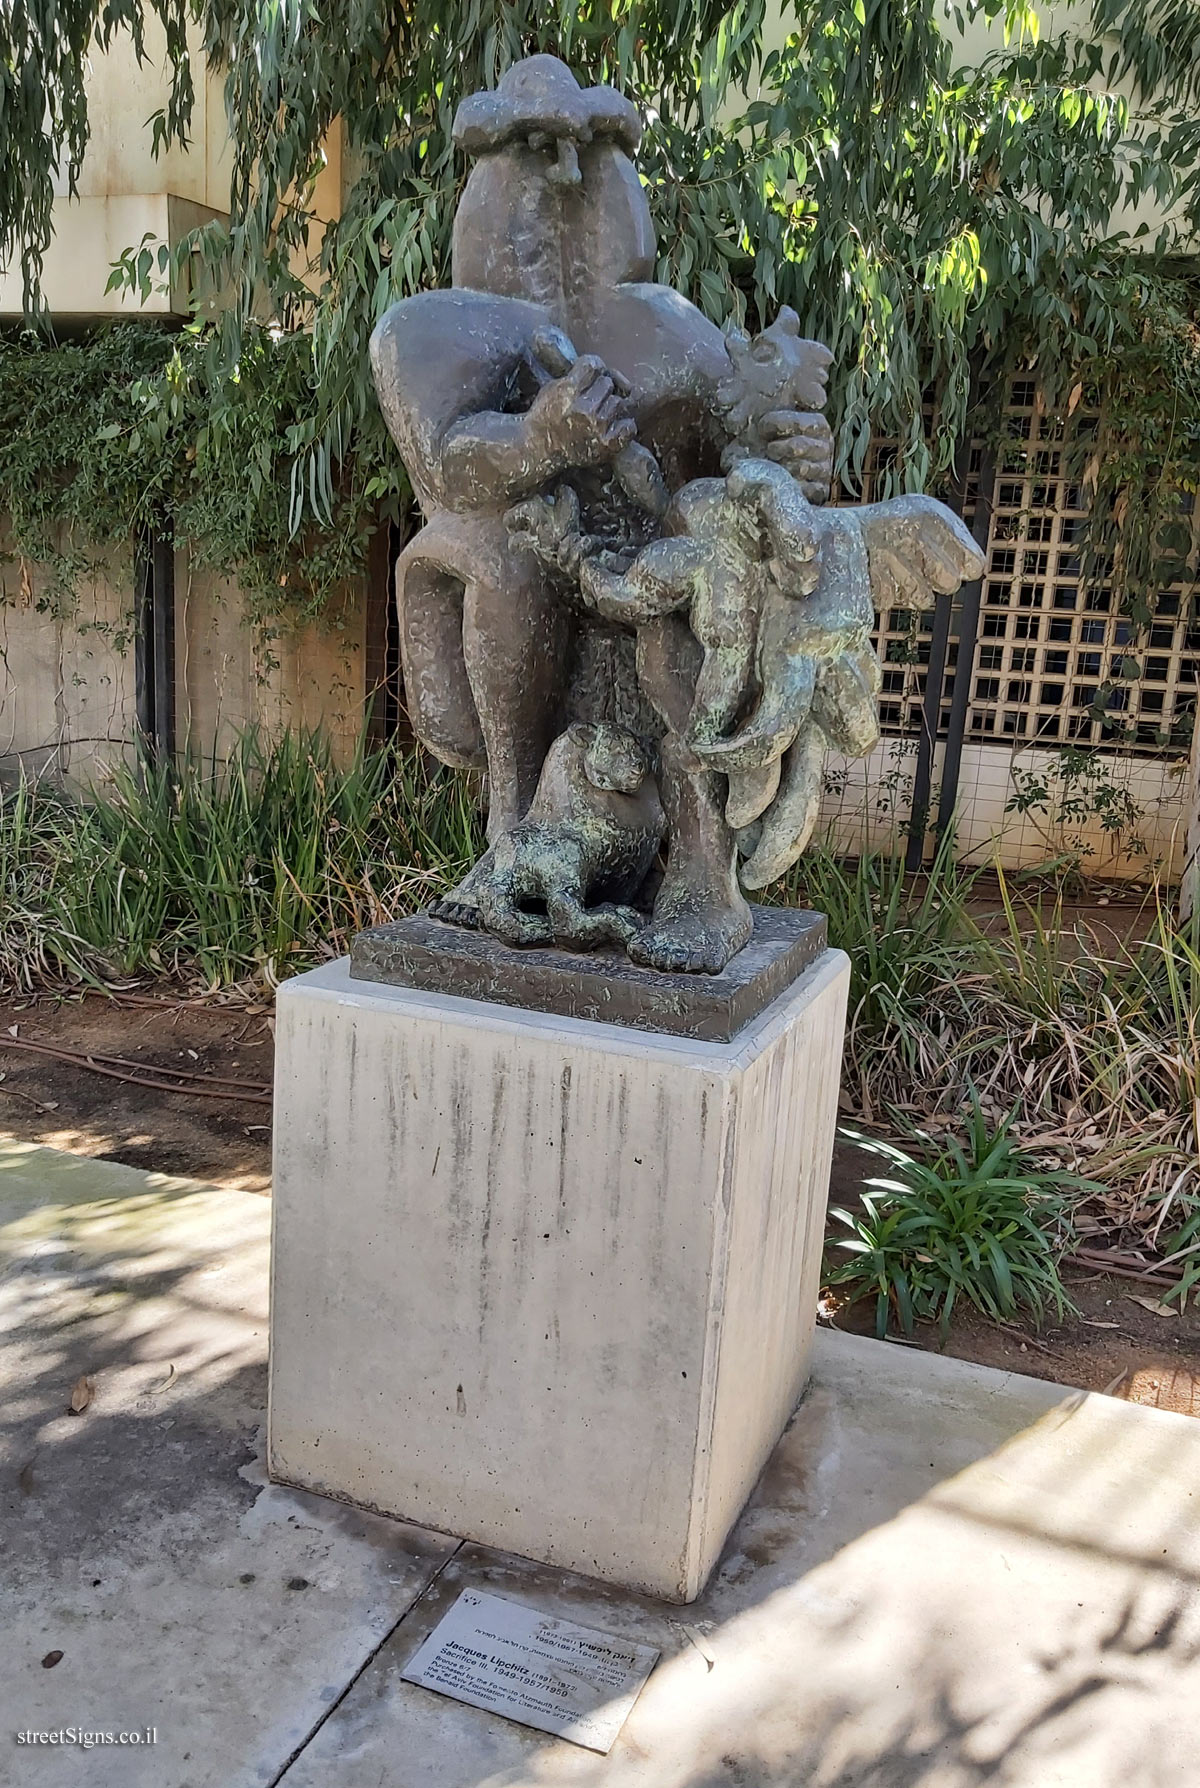 Tel Aviv - Lola Beer Ebner Sculpture Garden -  "Sacrifice III" Outdoor sculpture by Jacques Lipchitz - Tel Aviv Museum